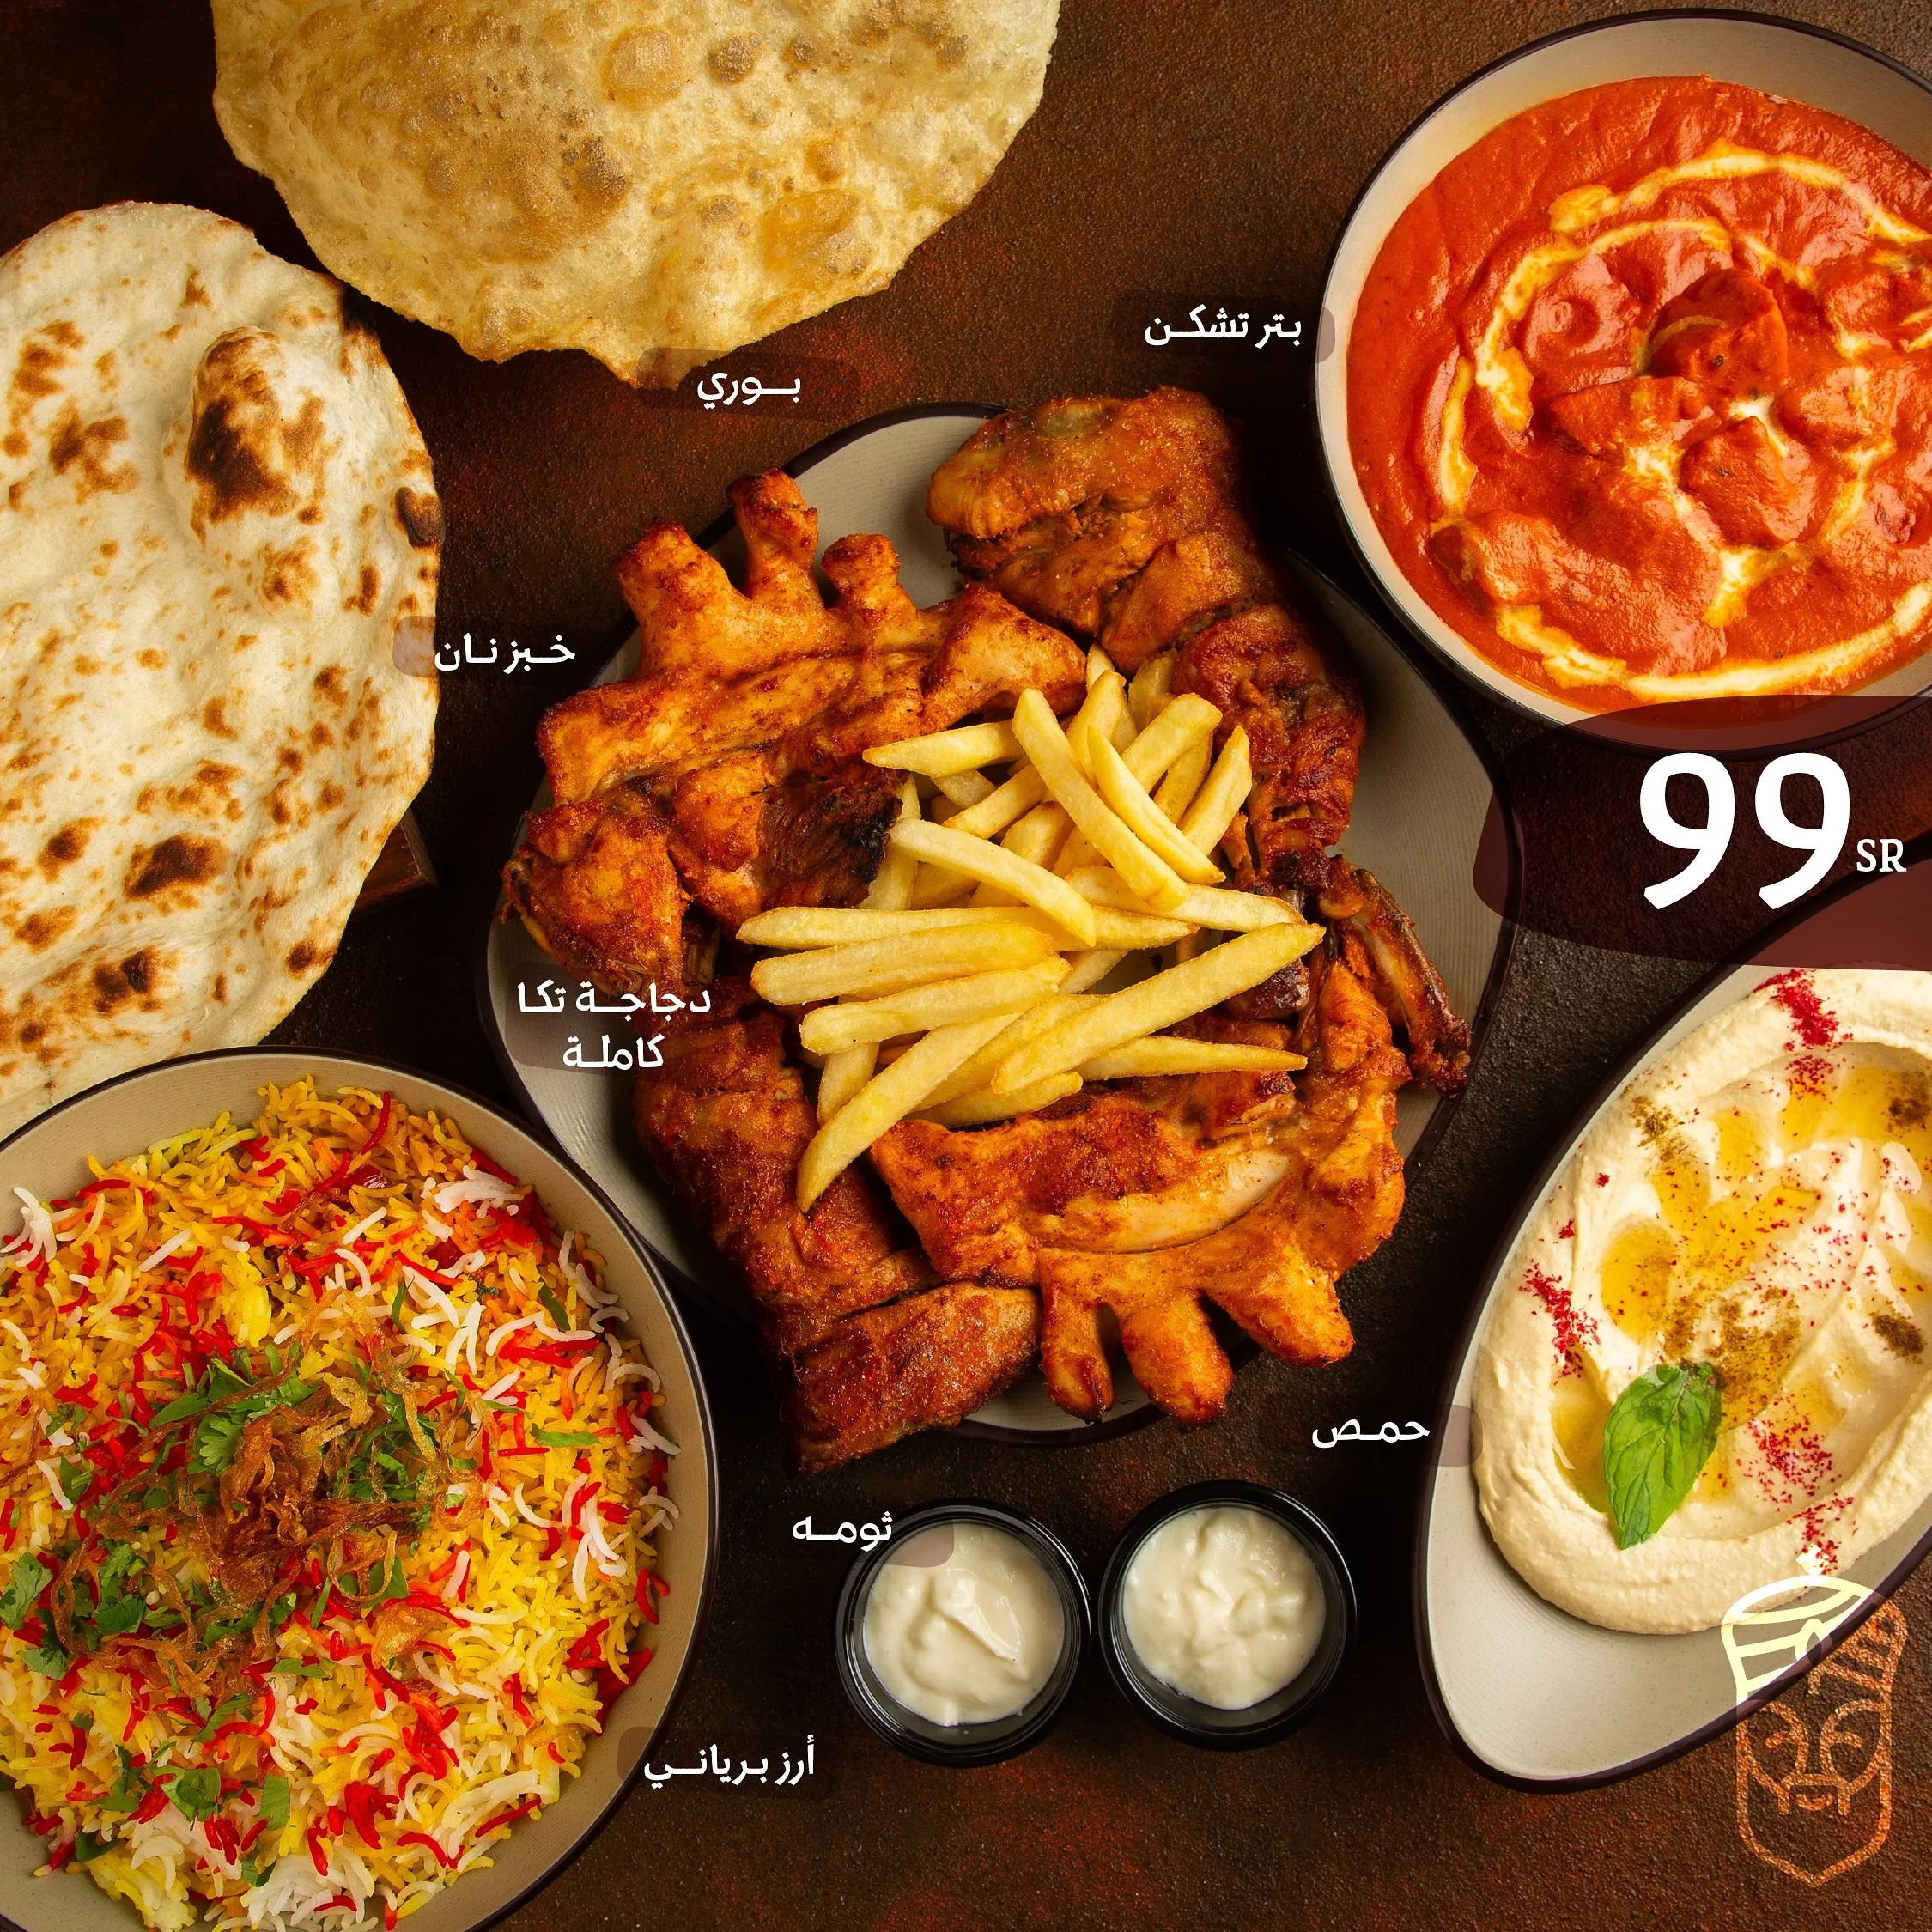 440777645 804180521634976 4609663244866167715 n jpg - أحدث عروض مطاعم السعودية اليوم | أفضل الوجبات بأقل سعر